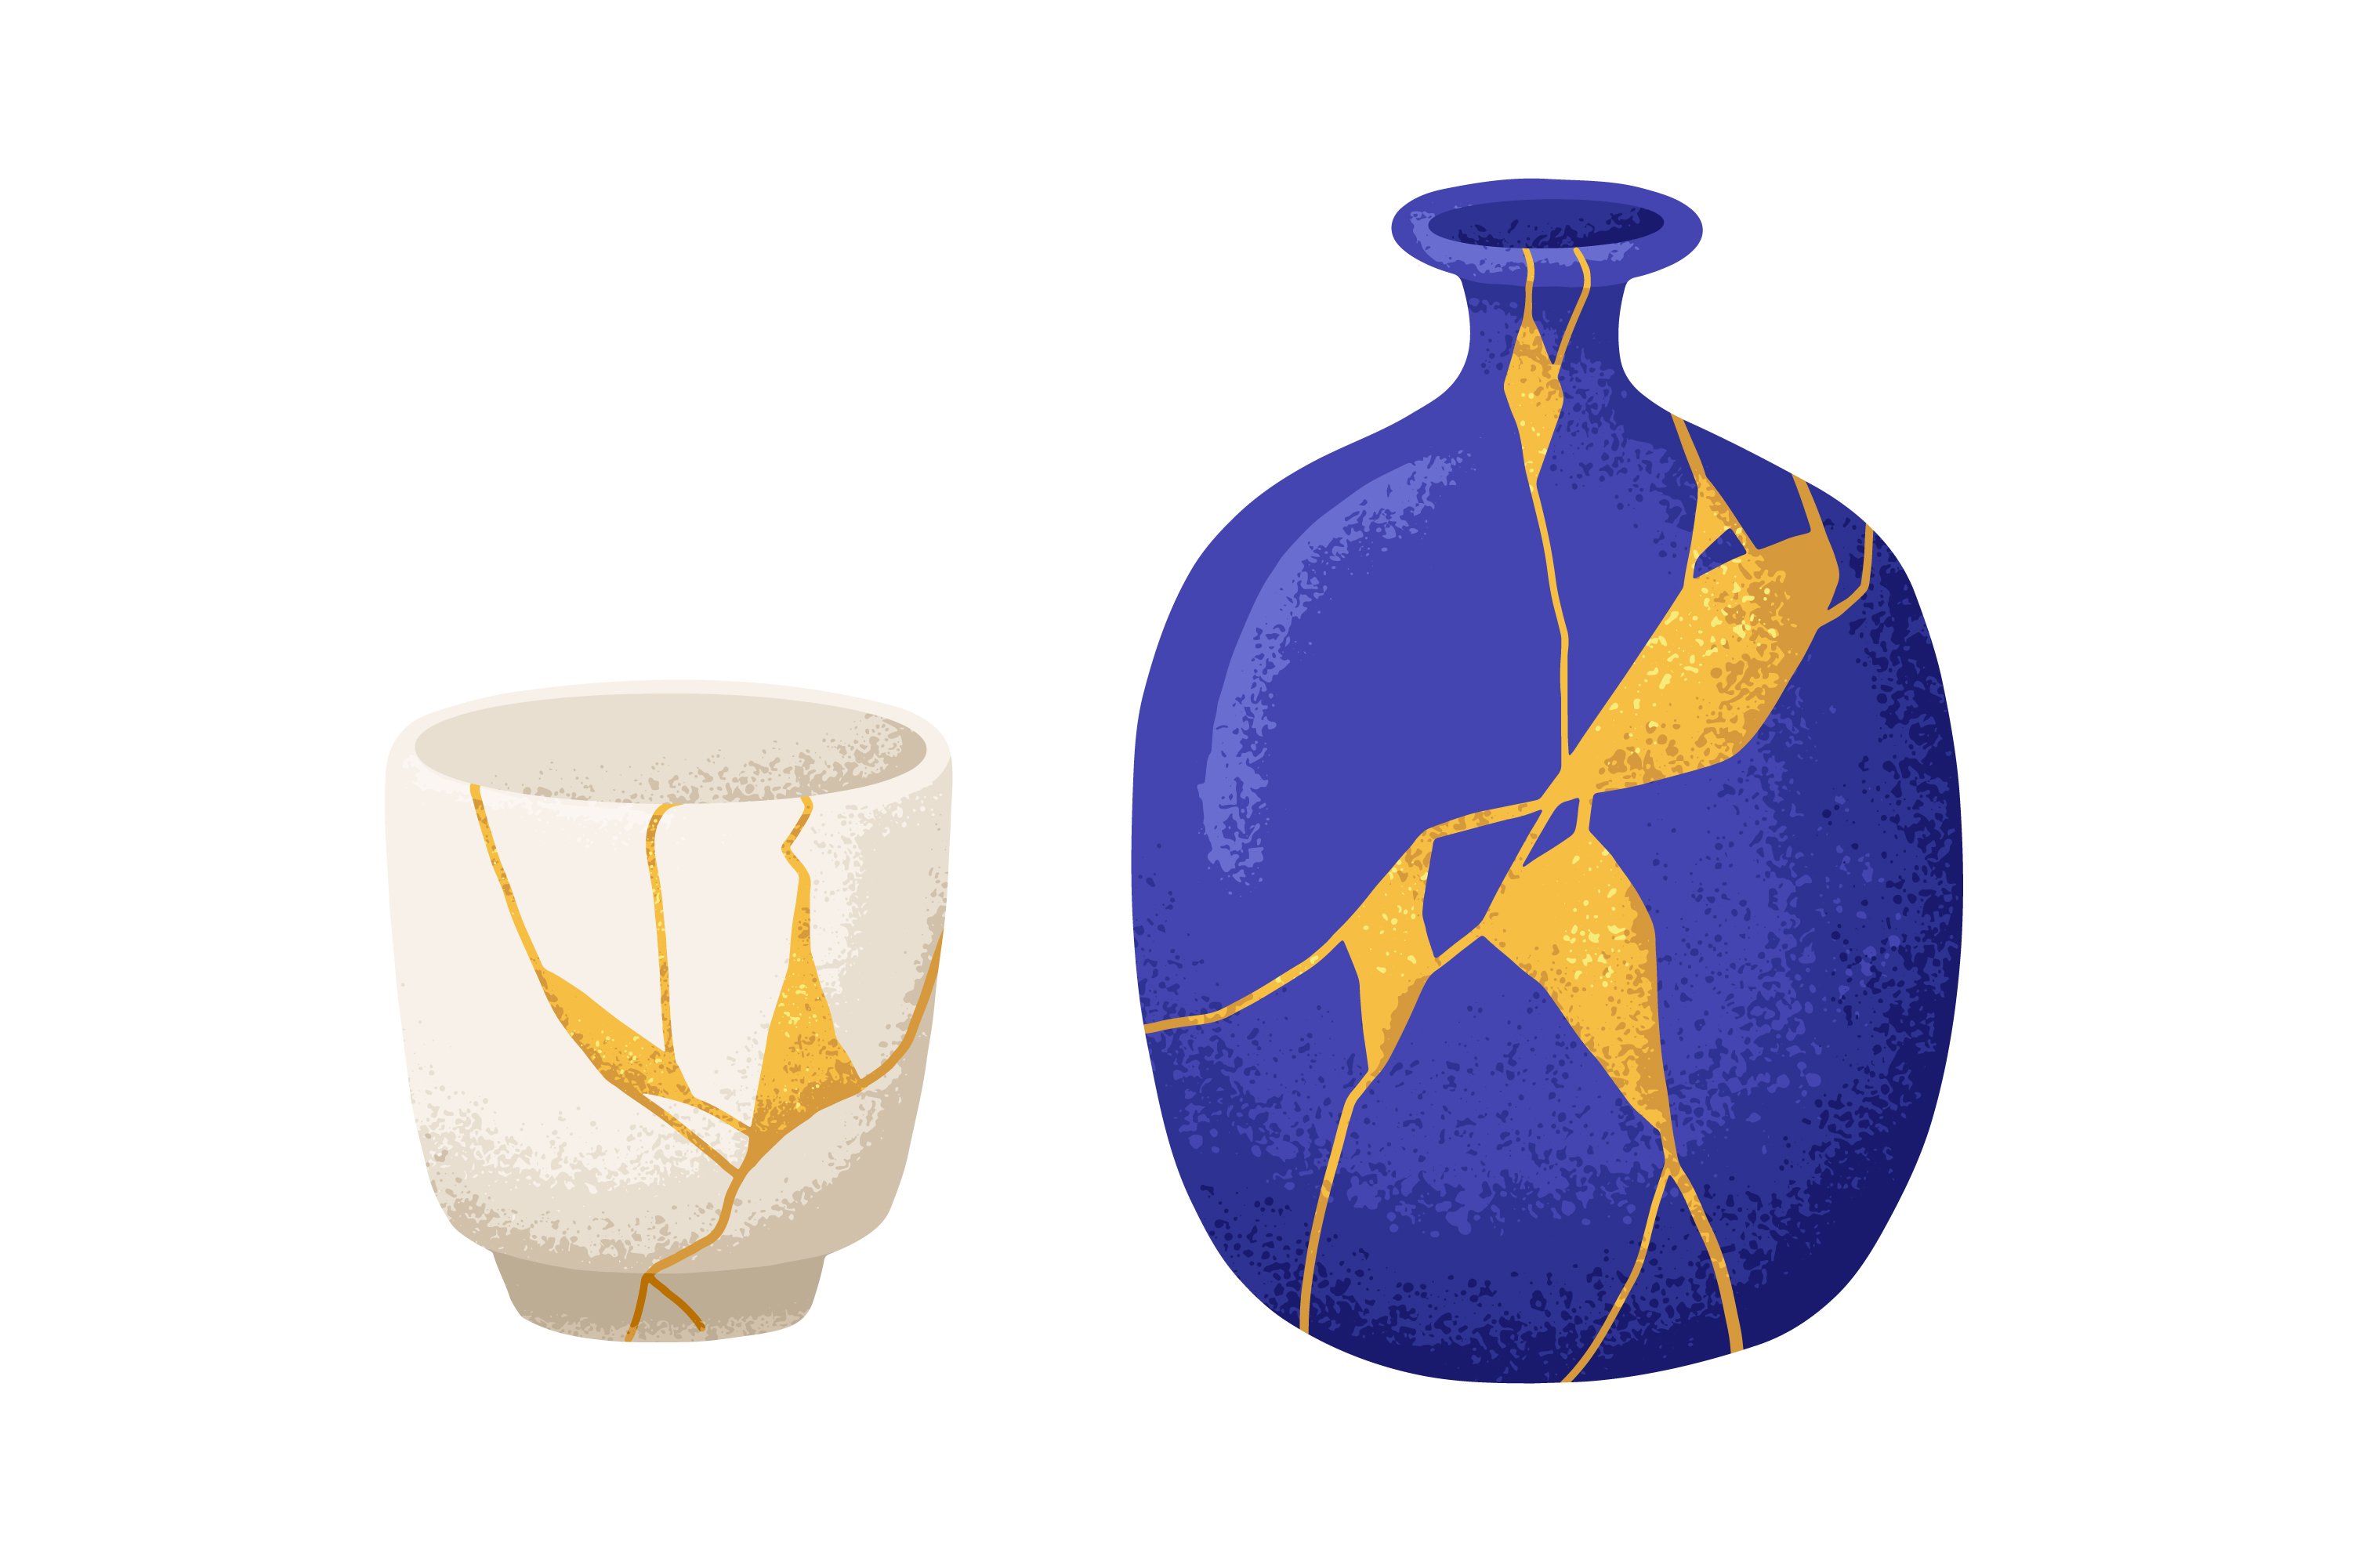 Kintsugi ceramic pottery set preview image.